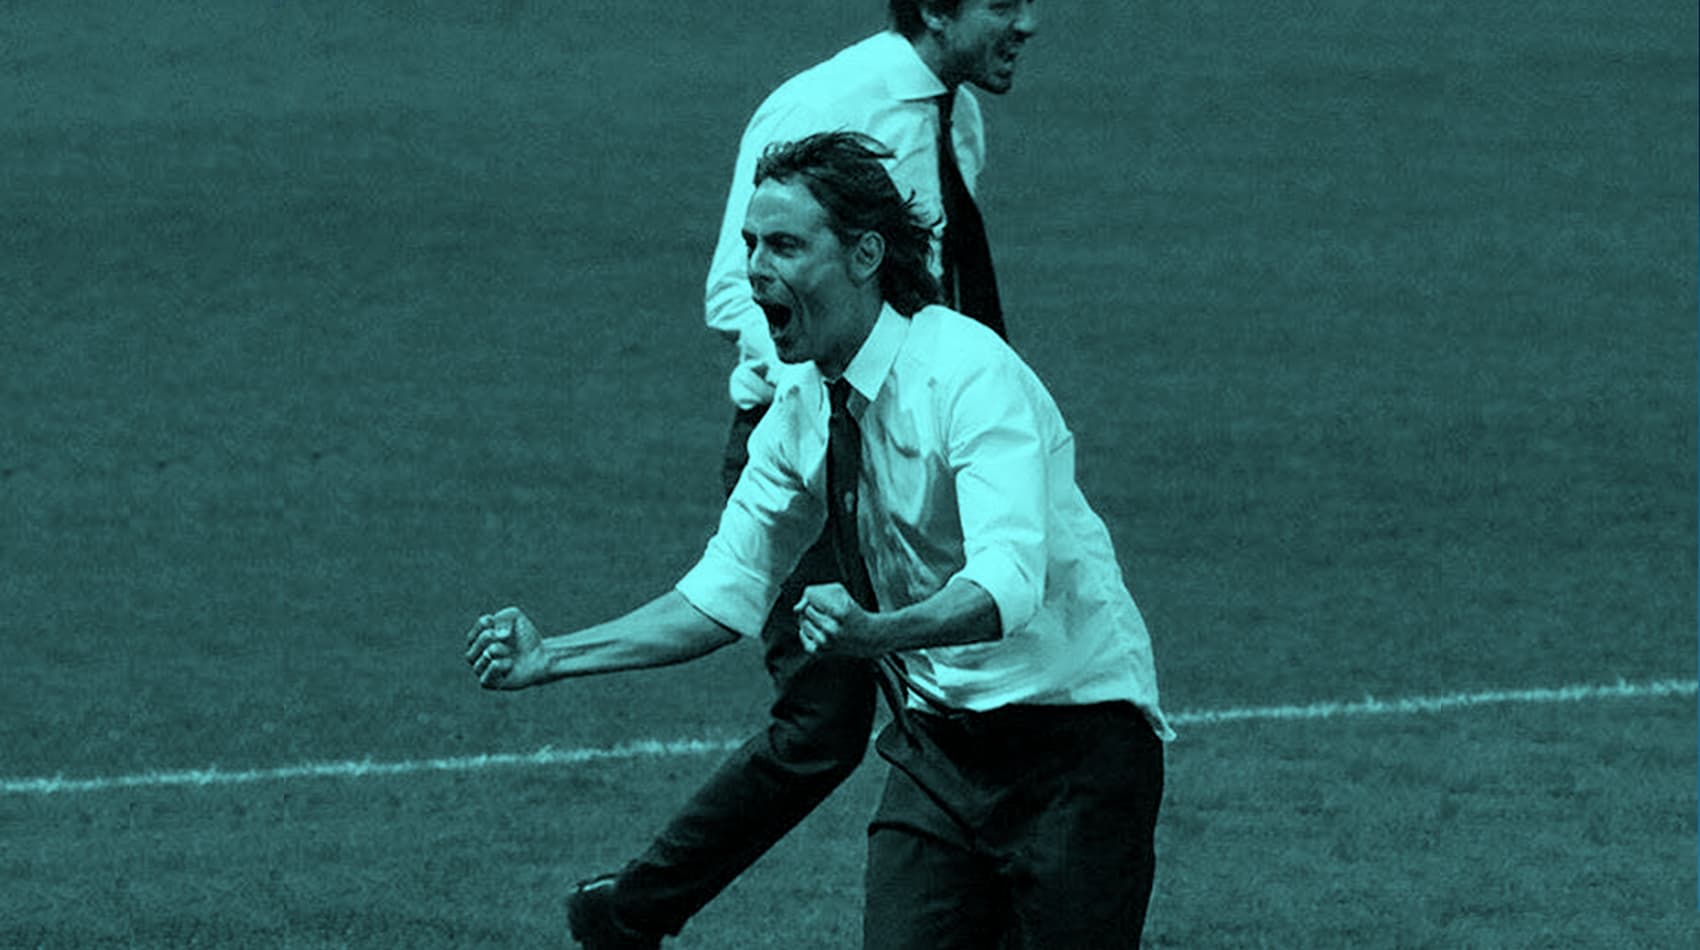 Inzaghi coach motivational